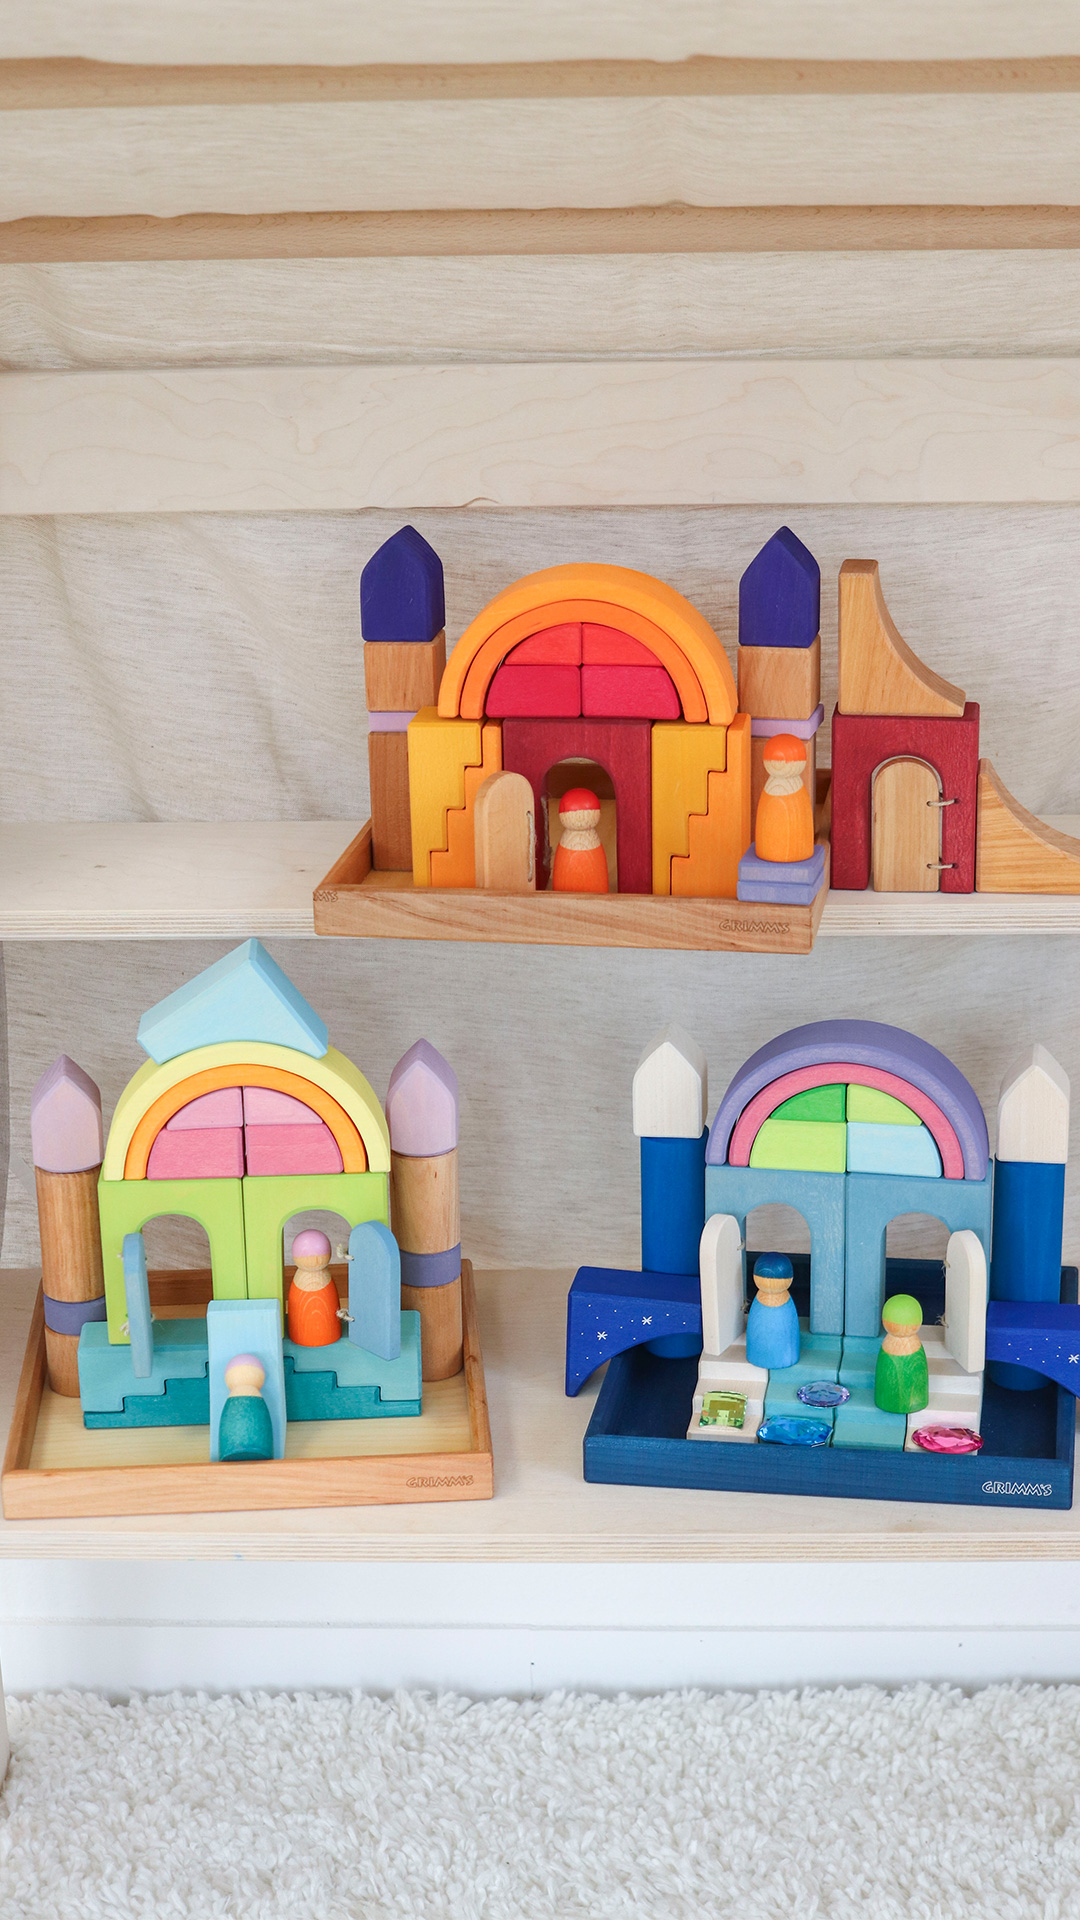 castles build of building sets in different colour ways